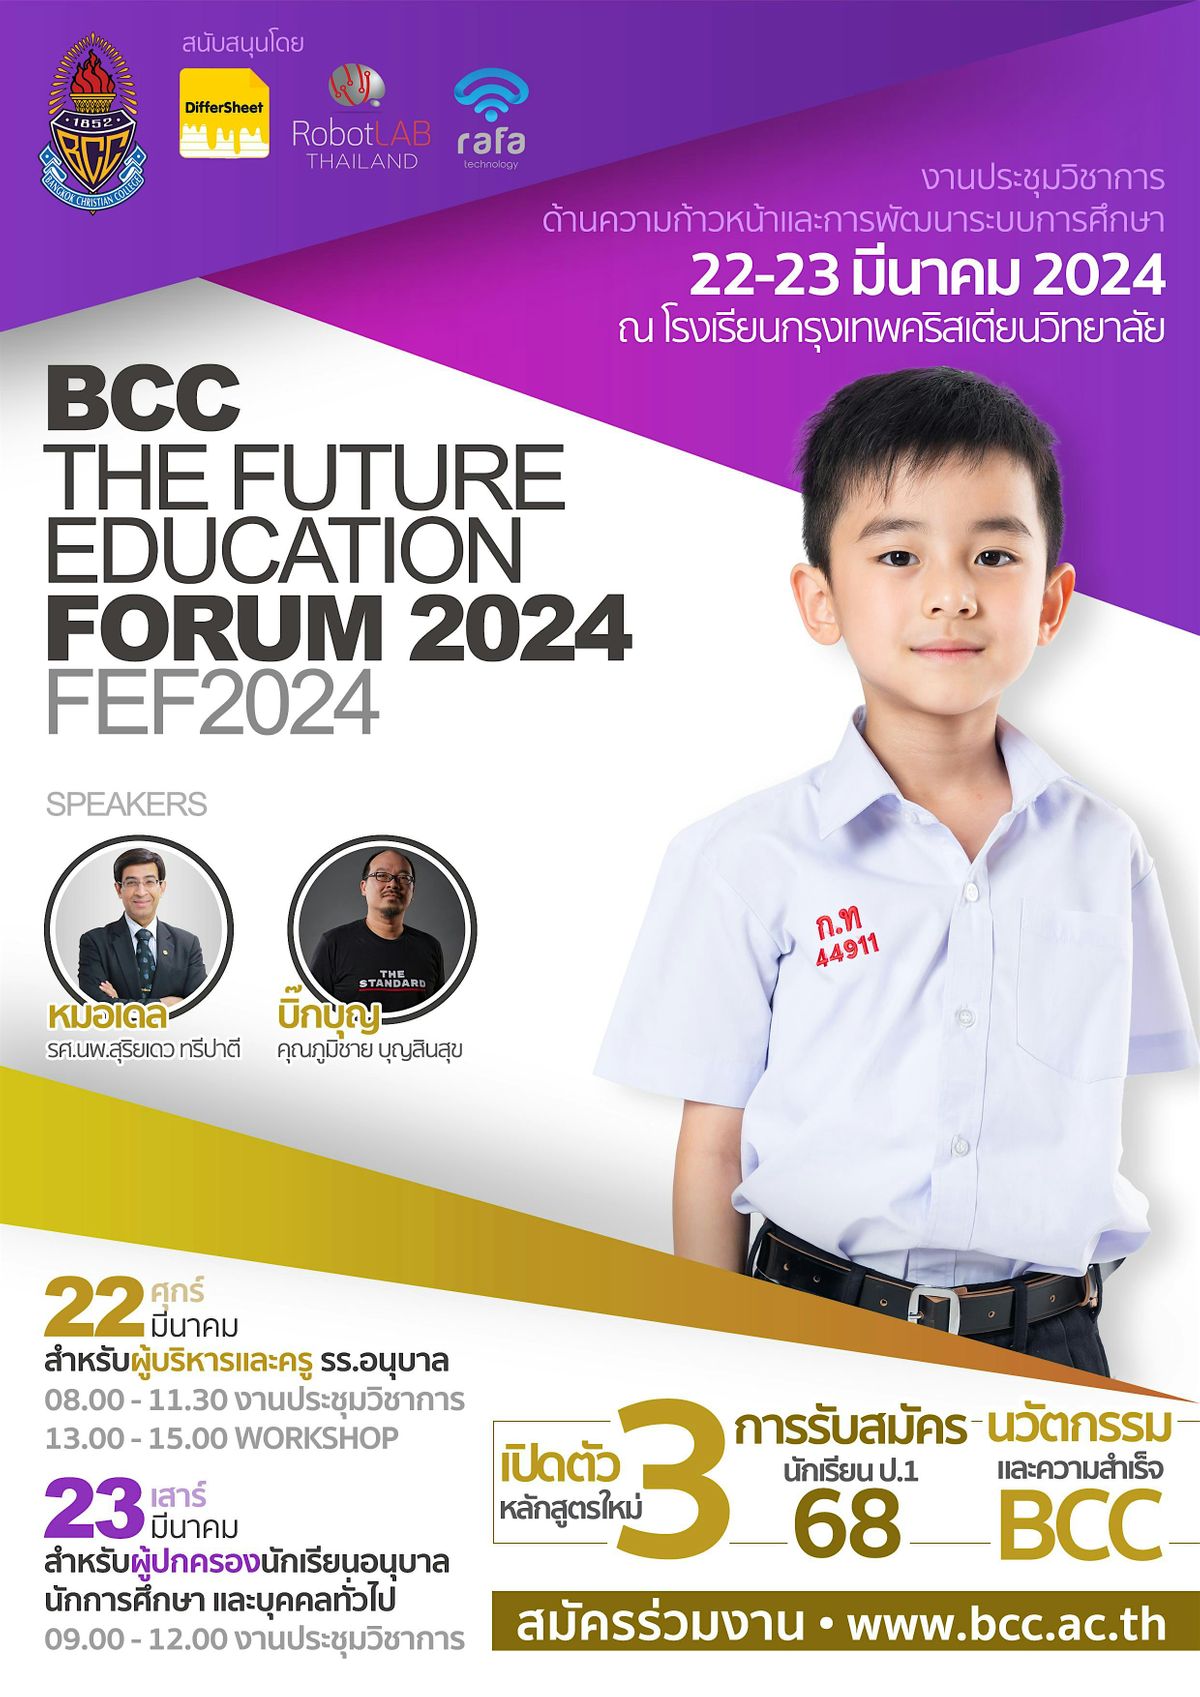 BCC THE FUTURE EDUCATION FORUM